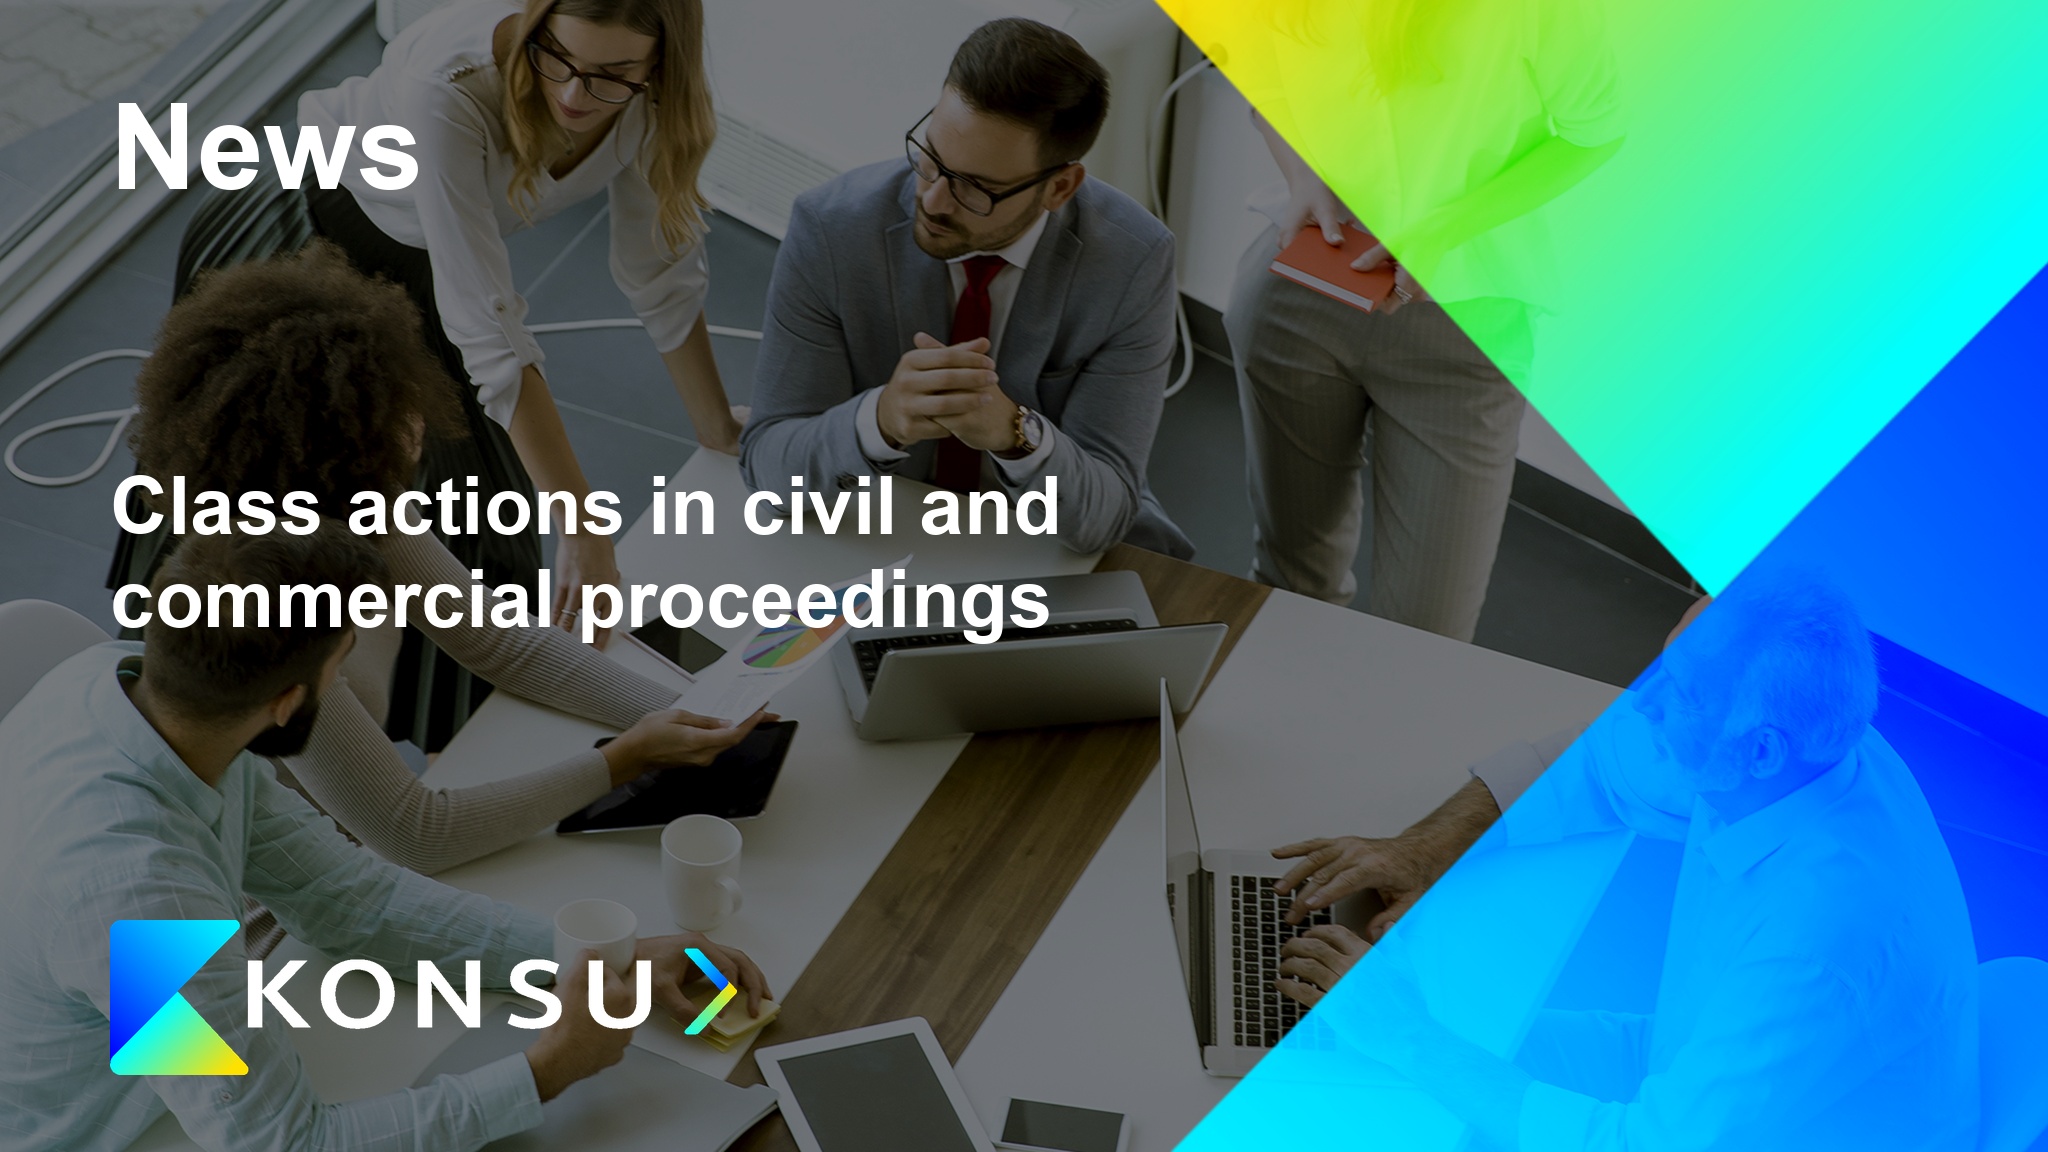 Class actions civil and commercial proceedings en konsu outsourc (2)